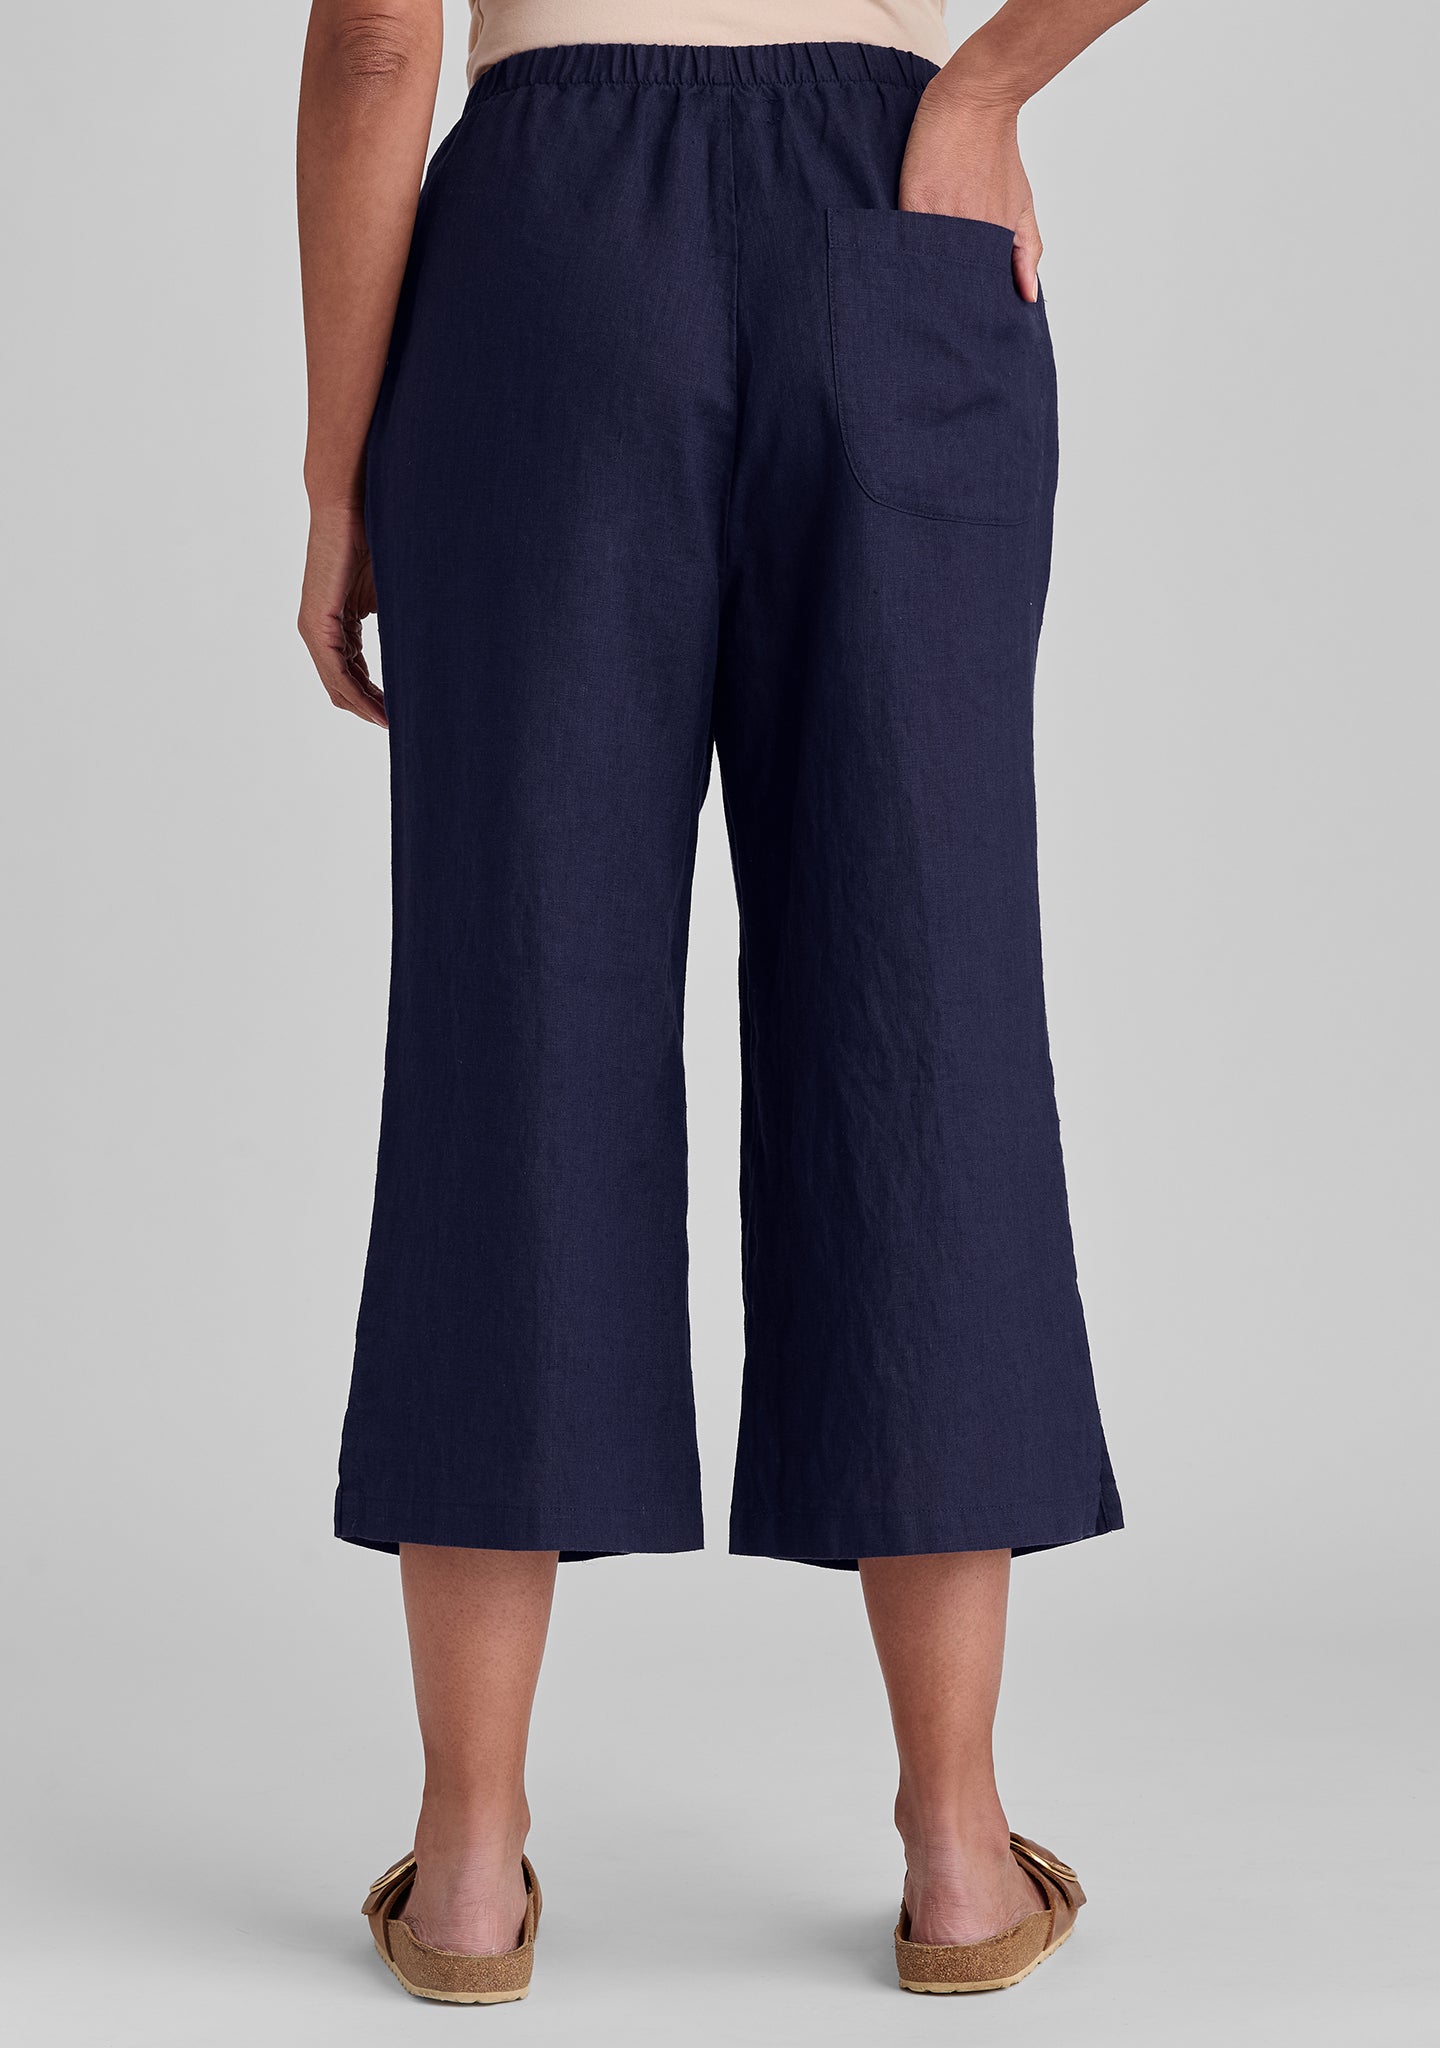 push outs linen pants with elastic waist details